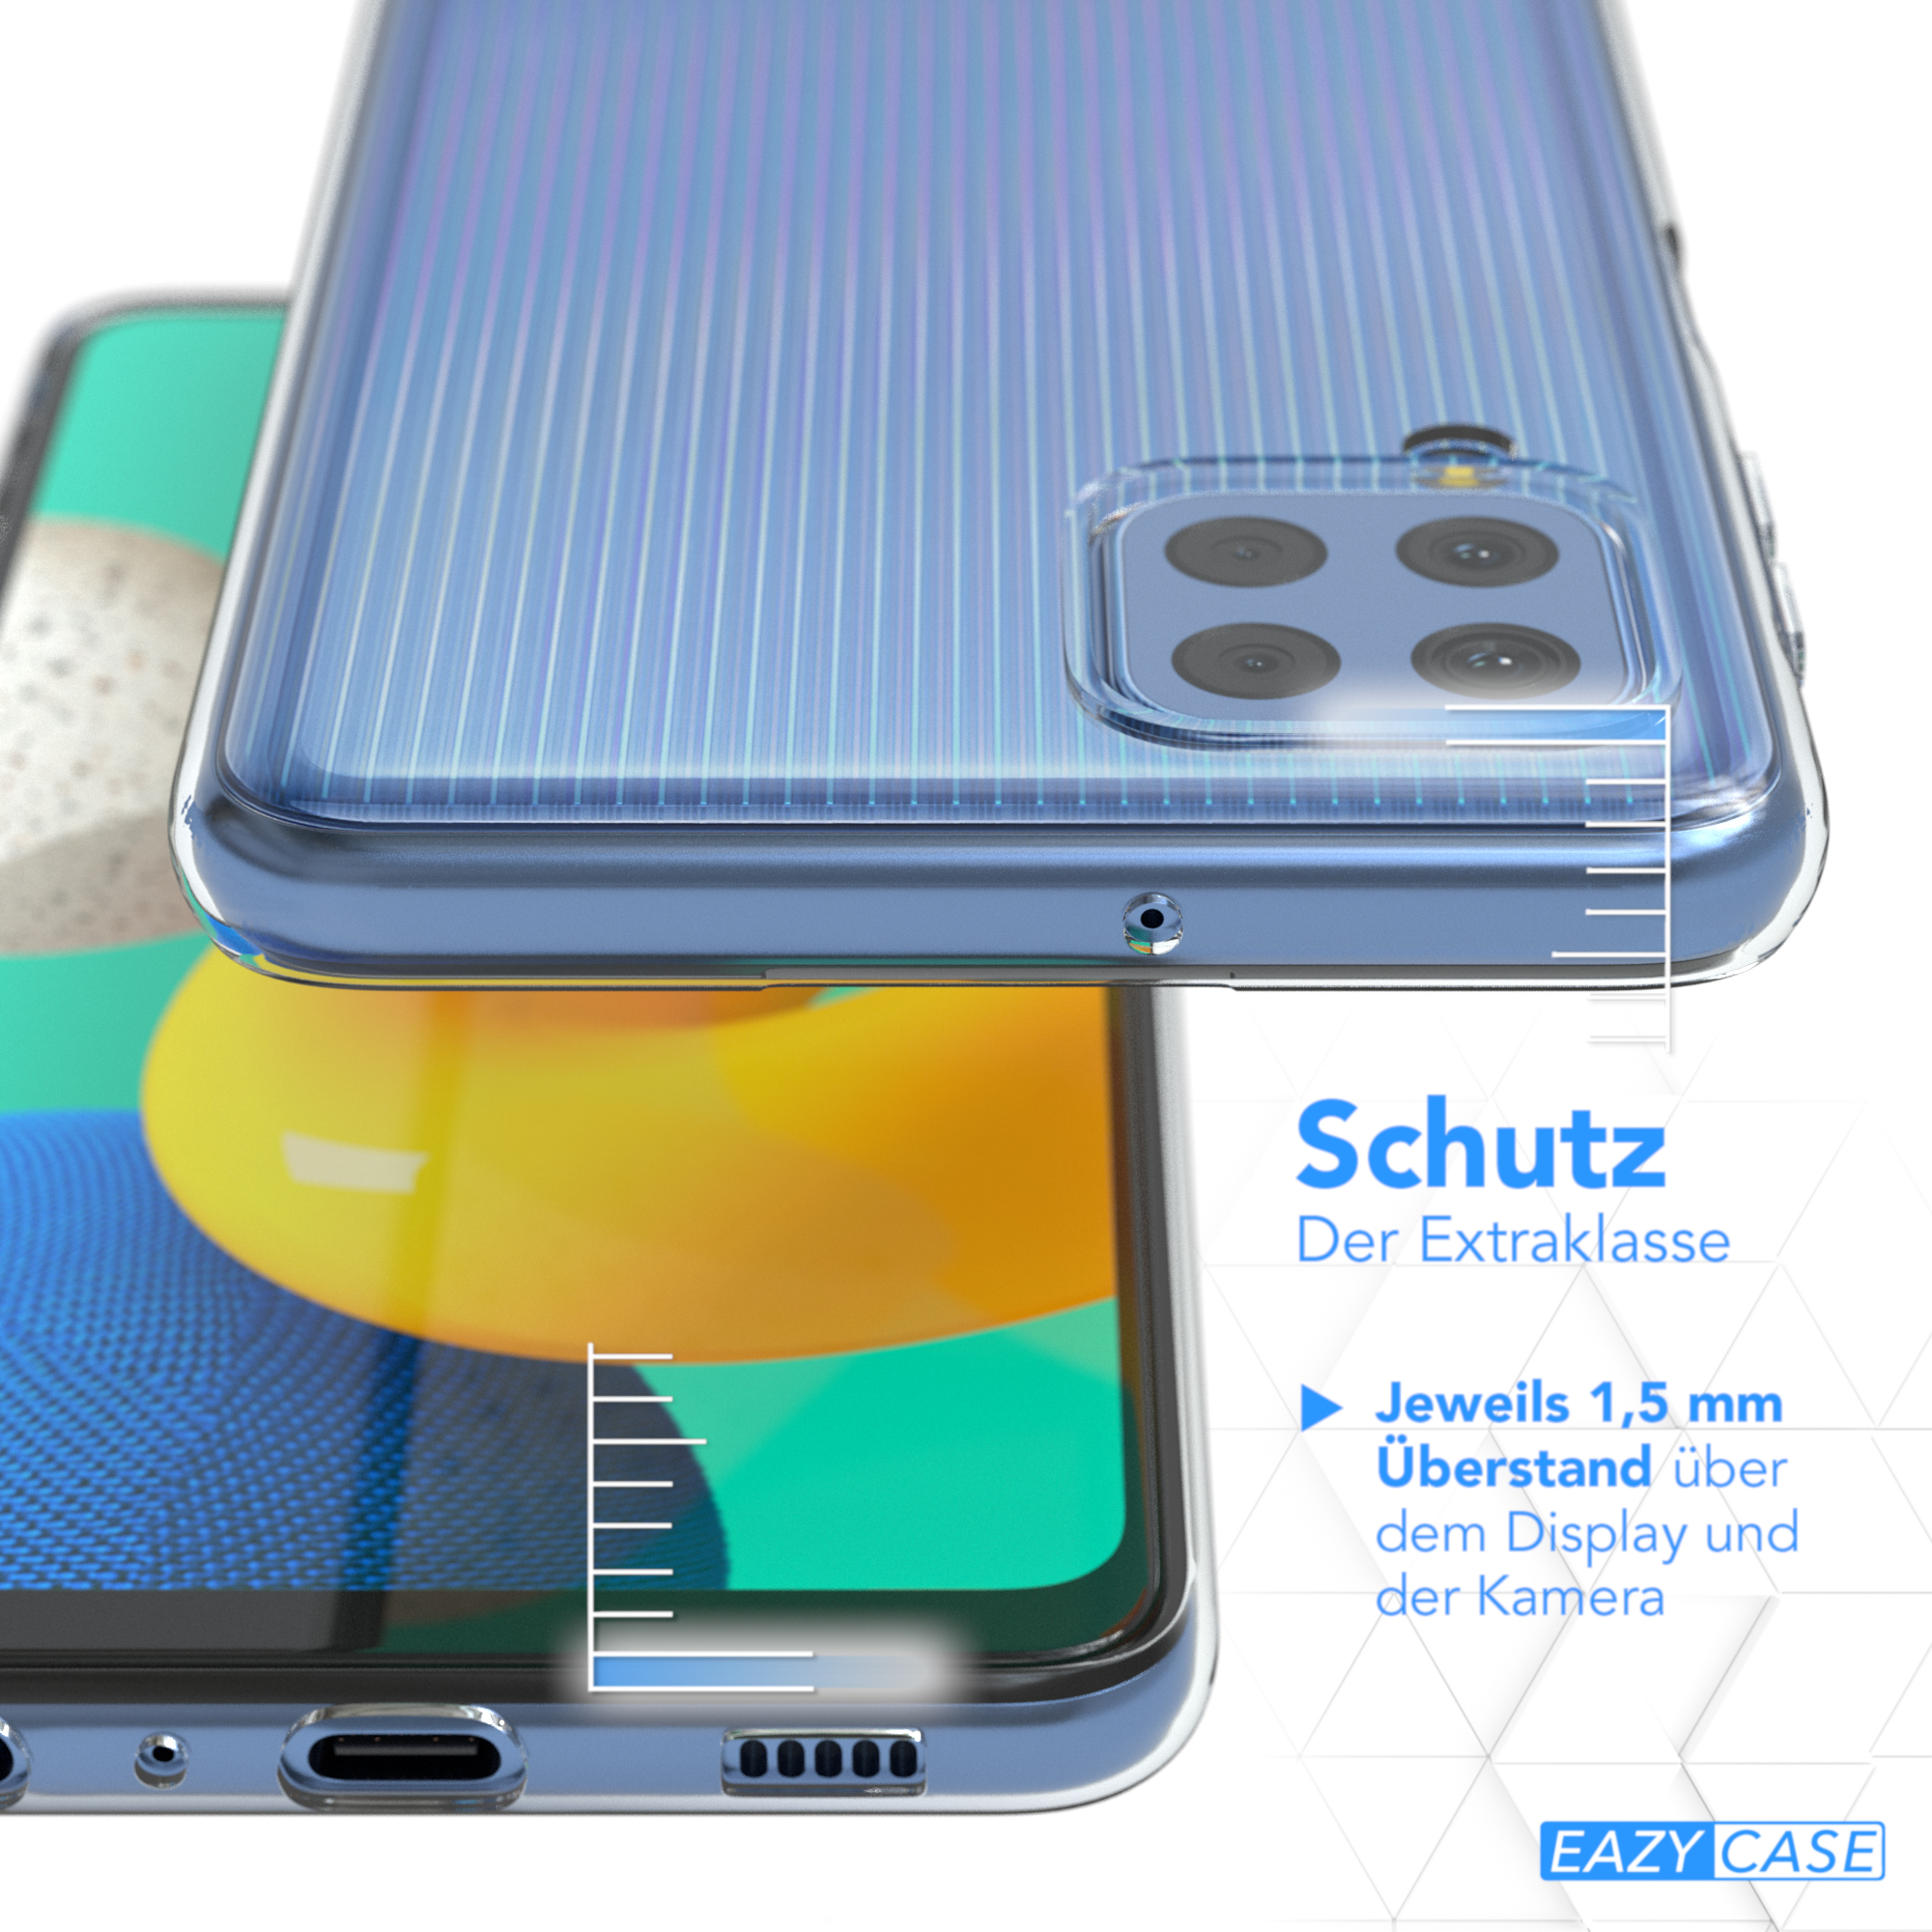 EAZY CASE Slimcover Clear, / Backcover, Galaxy M32 M22 4G, A22 / Durchsichtig Samsung